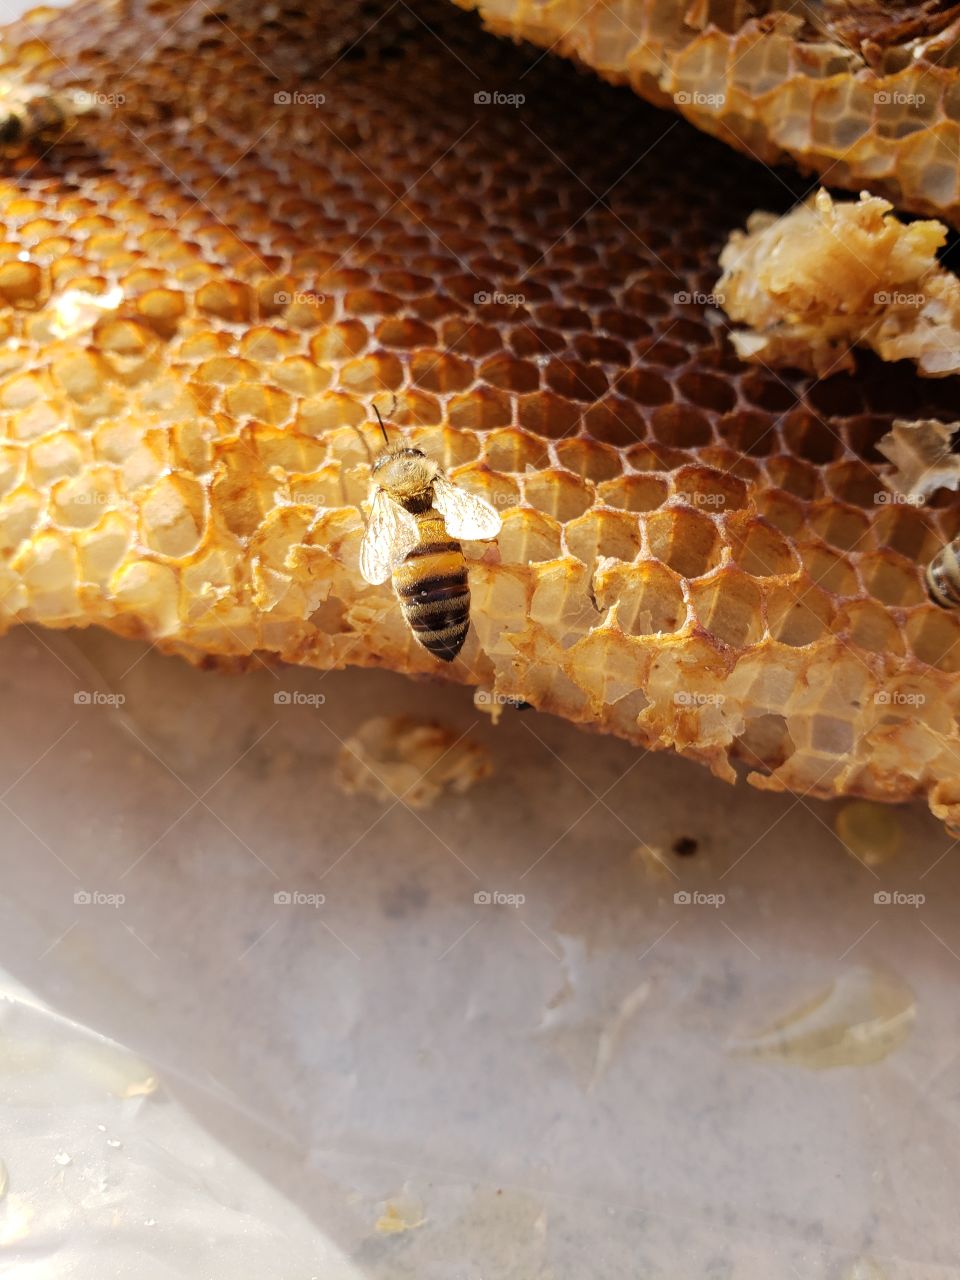 honeybee on honeycomb